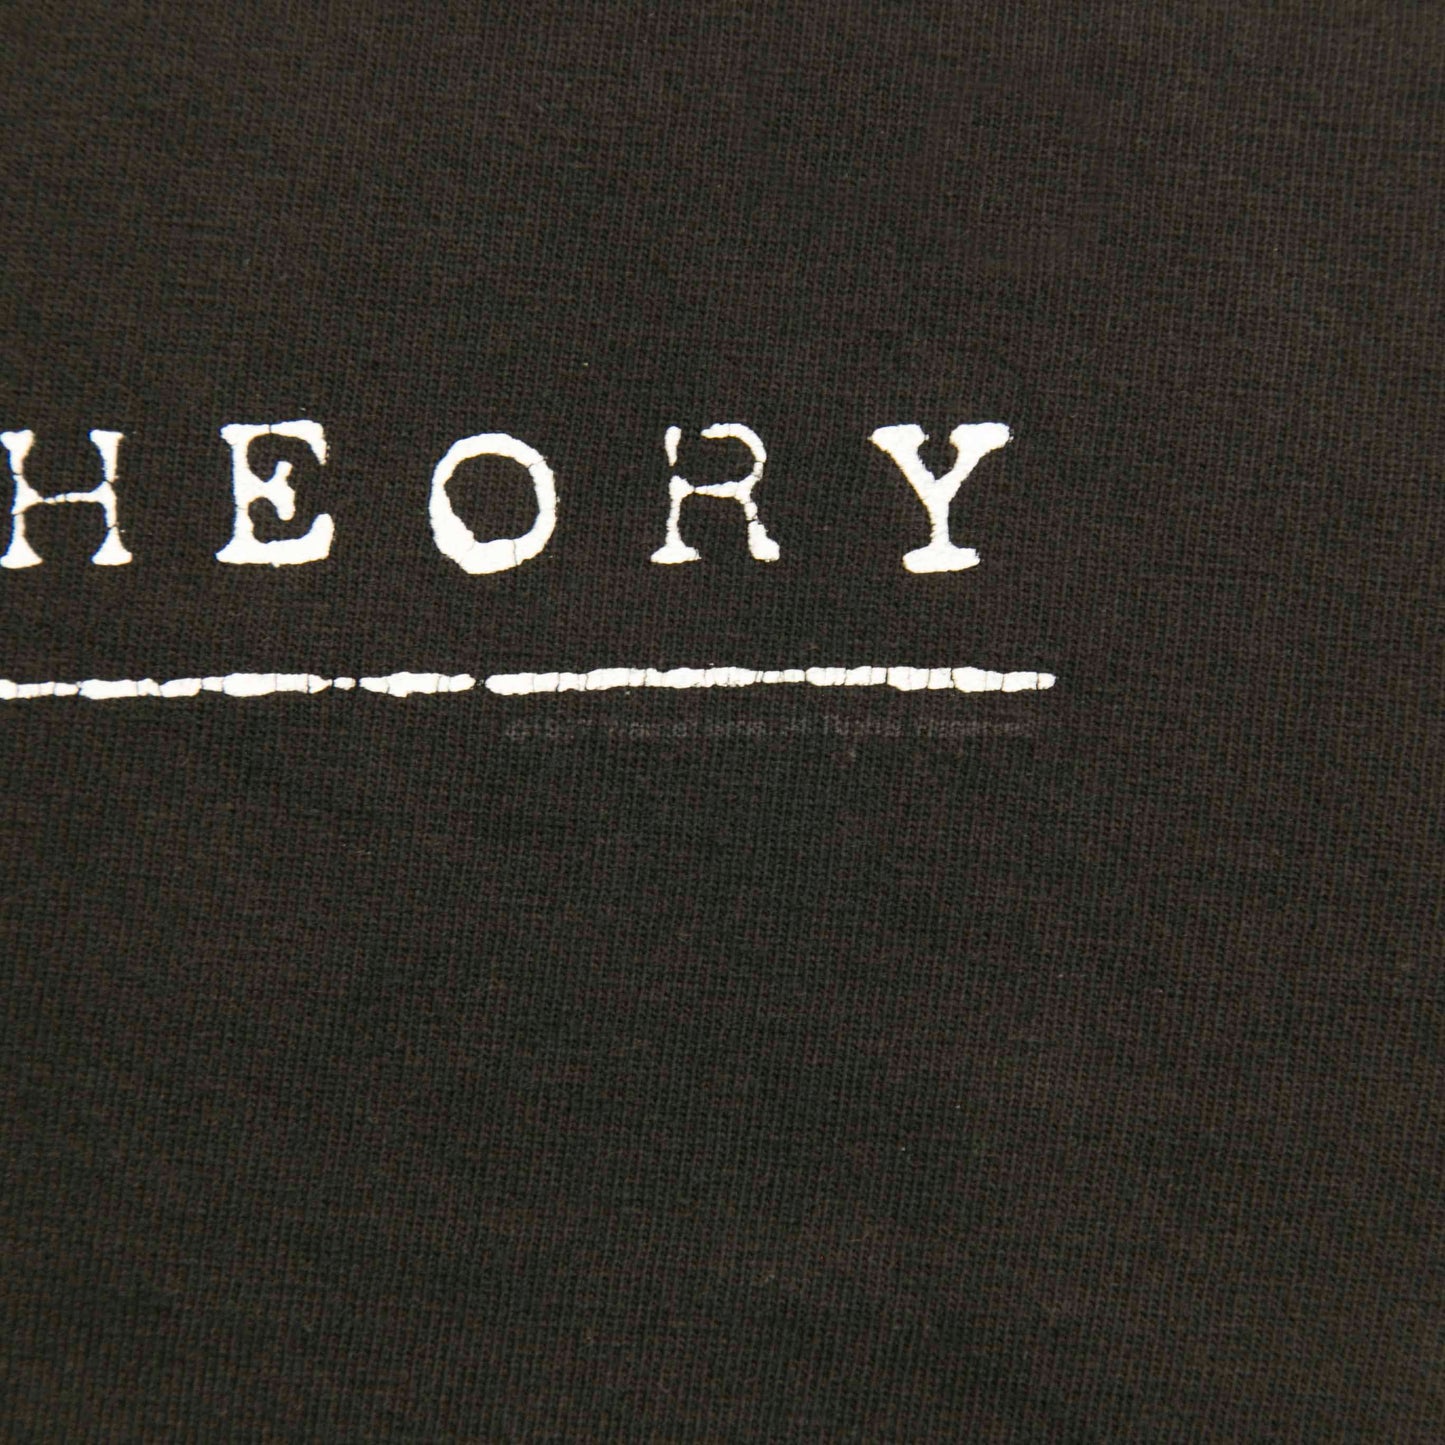 Conspiracy Theory - XL/TG